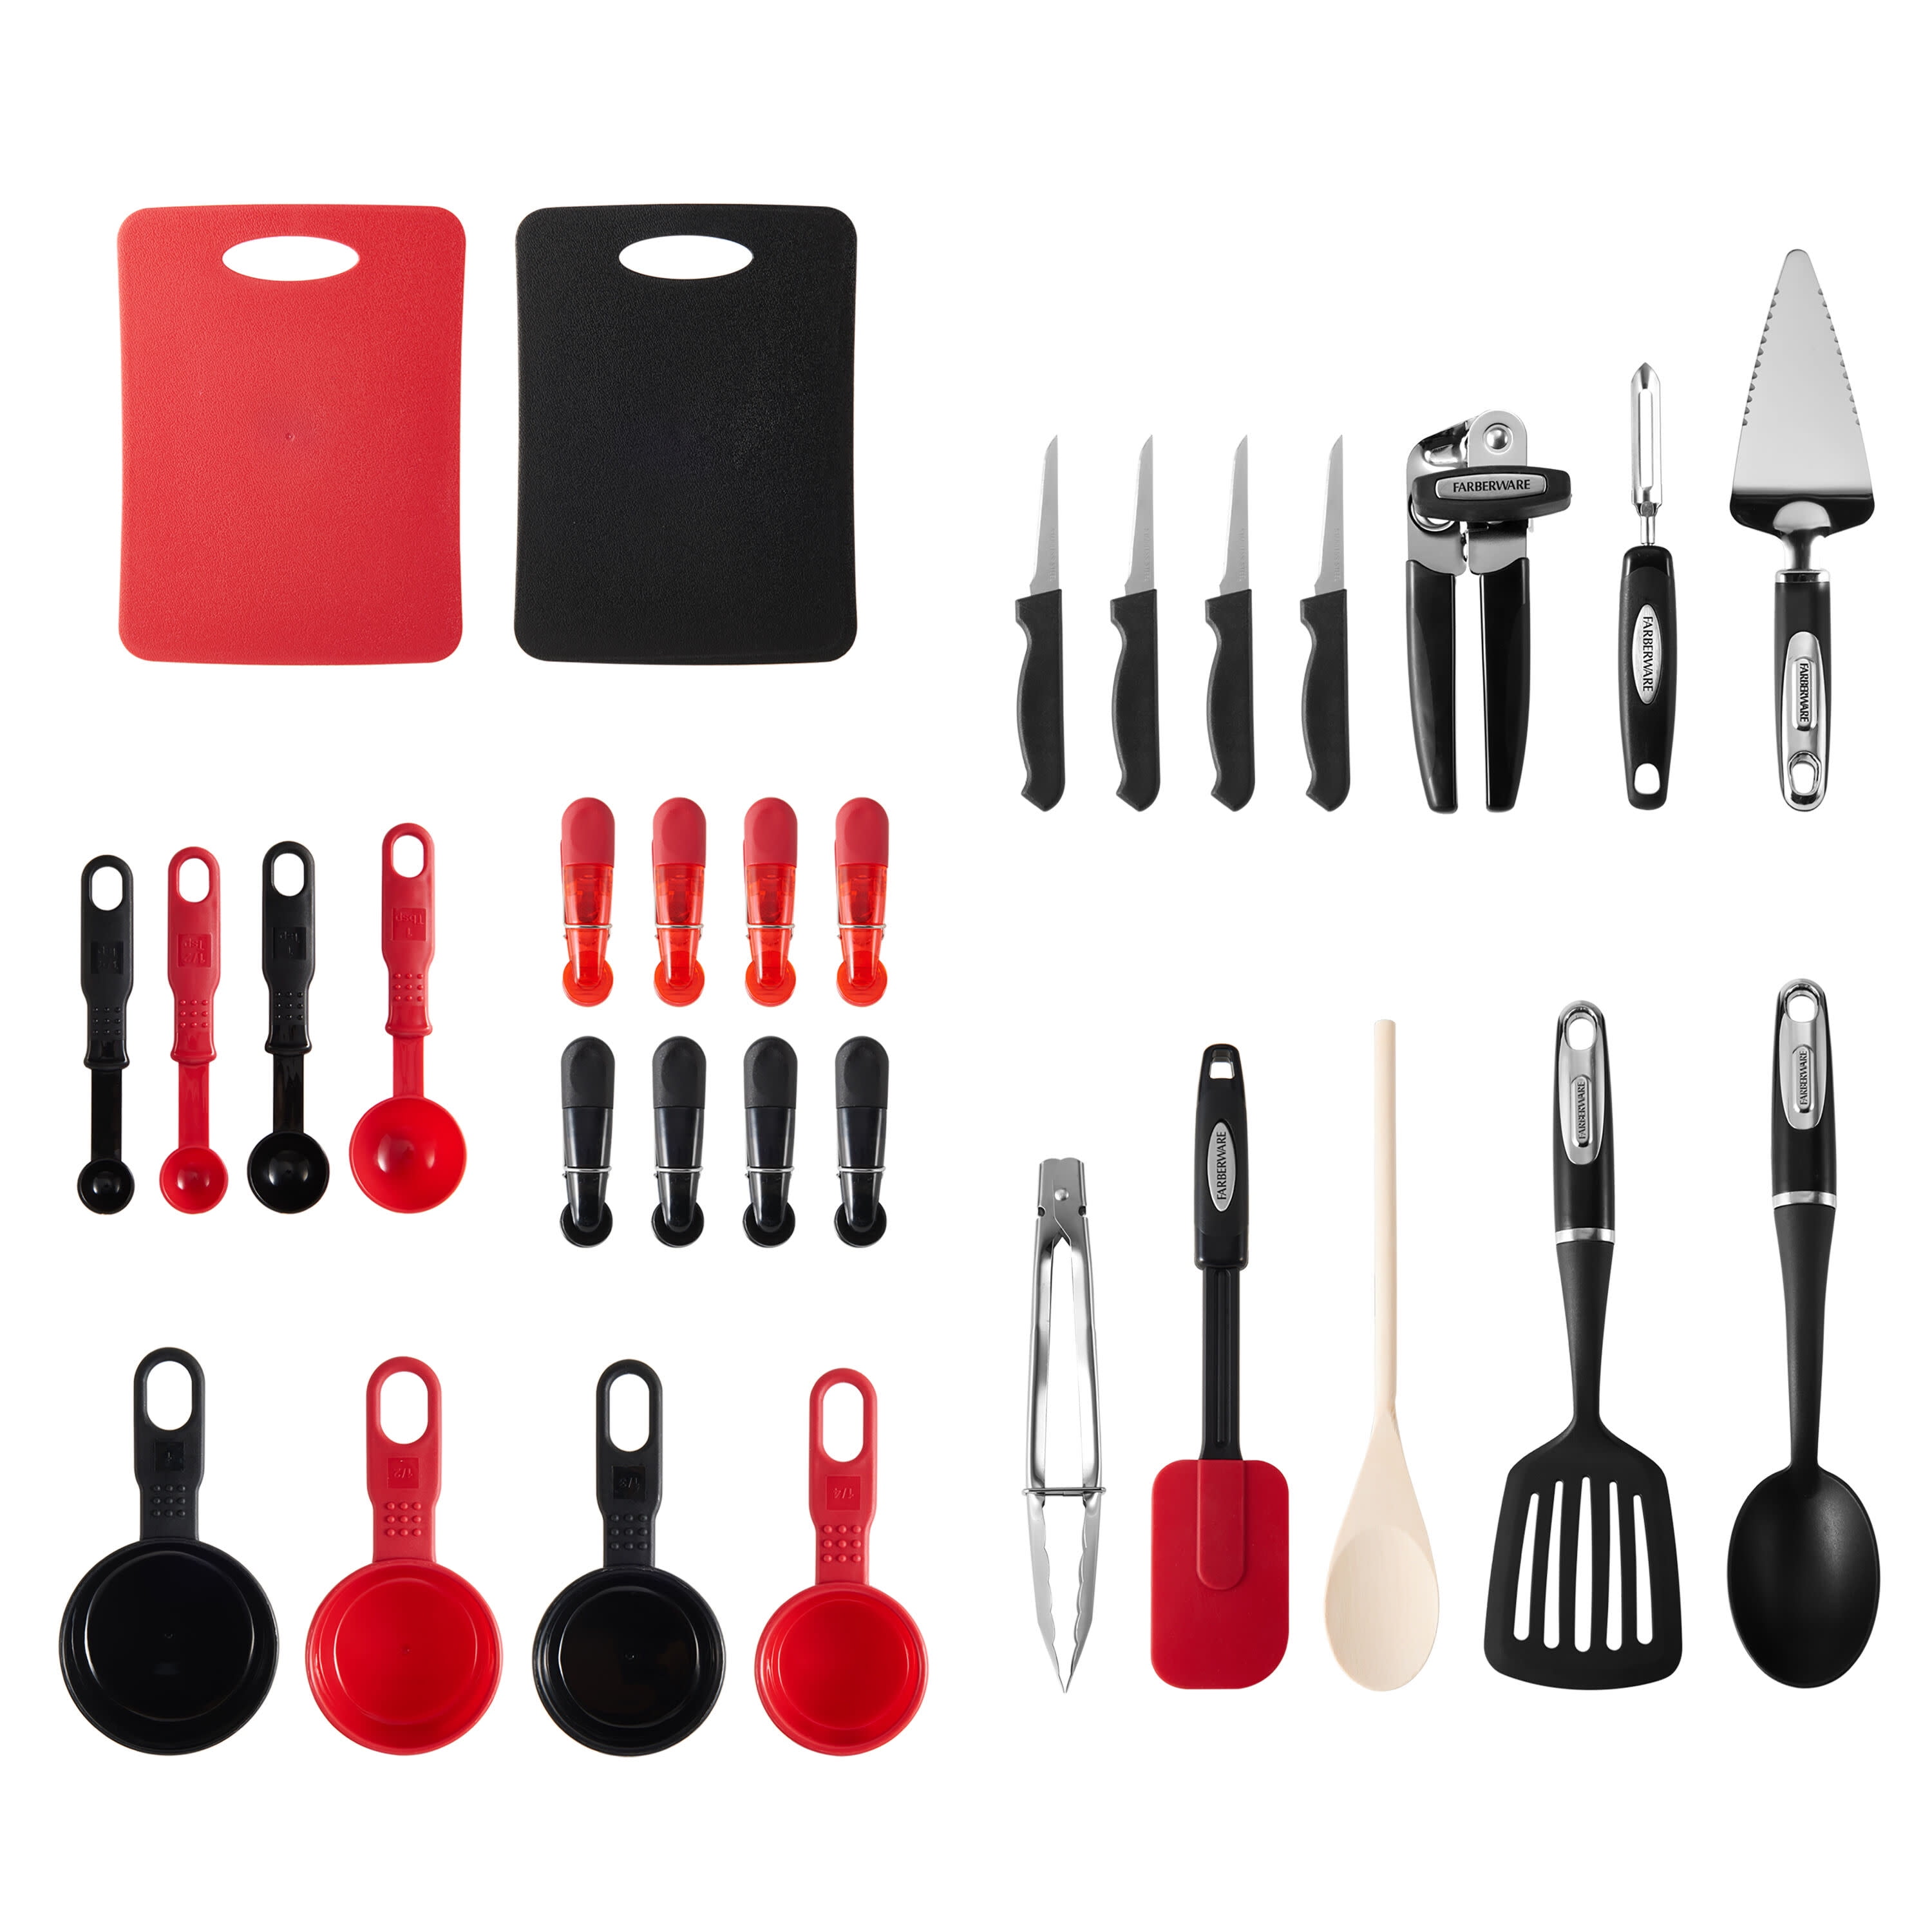 Farberware 14-Piece Professional Kitchen Tool and Gadget Set